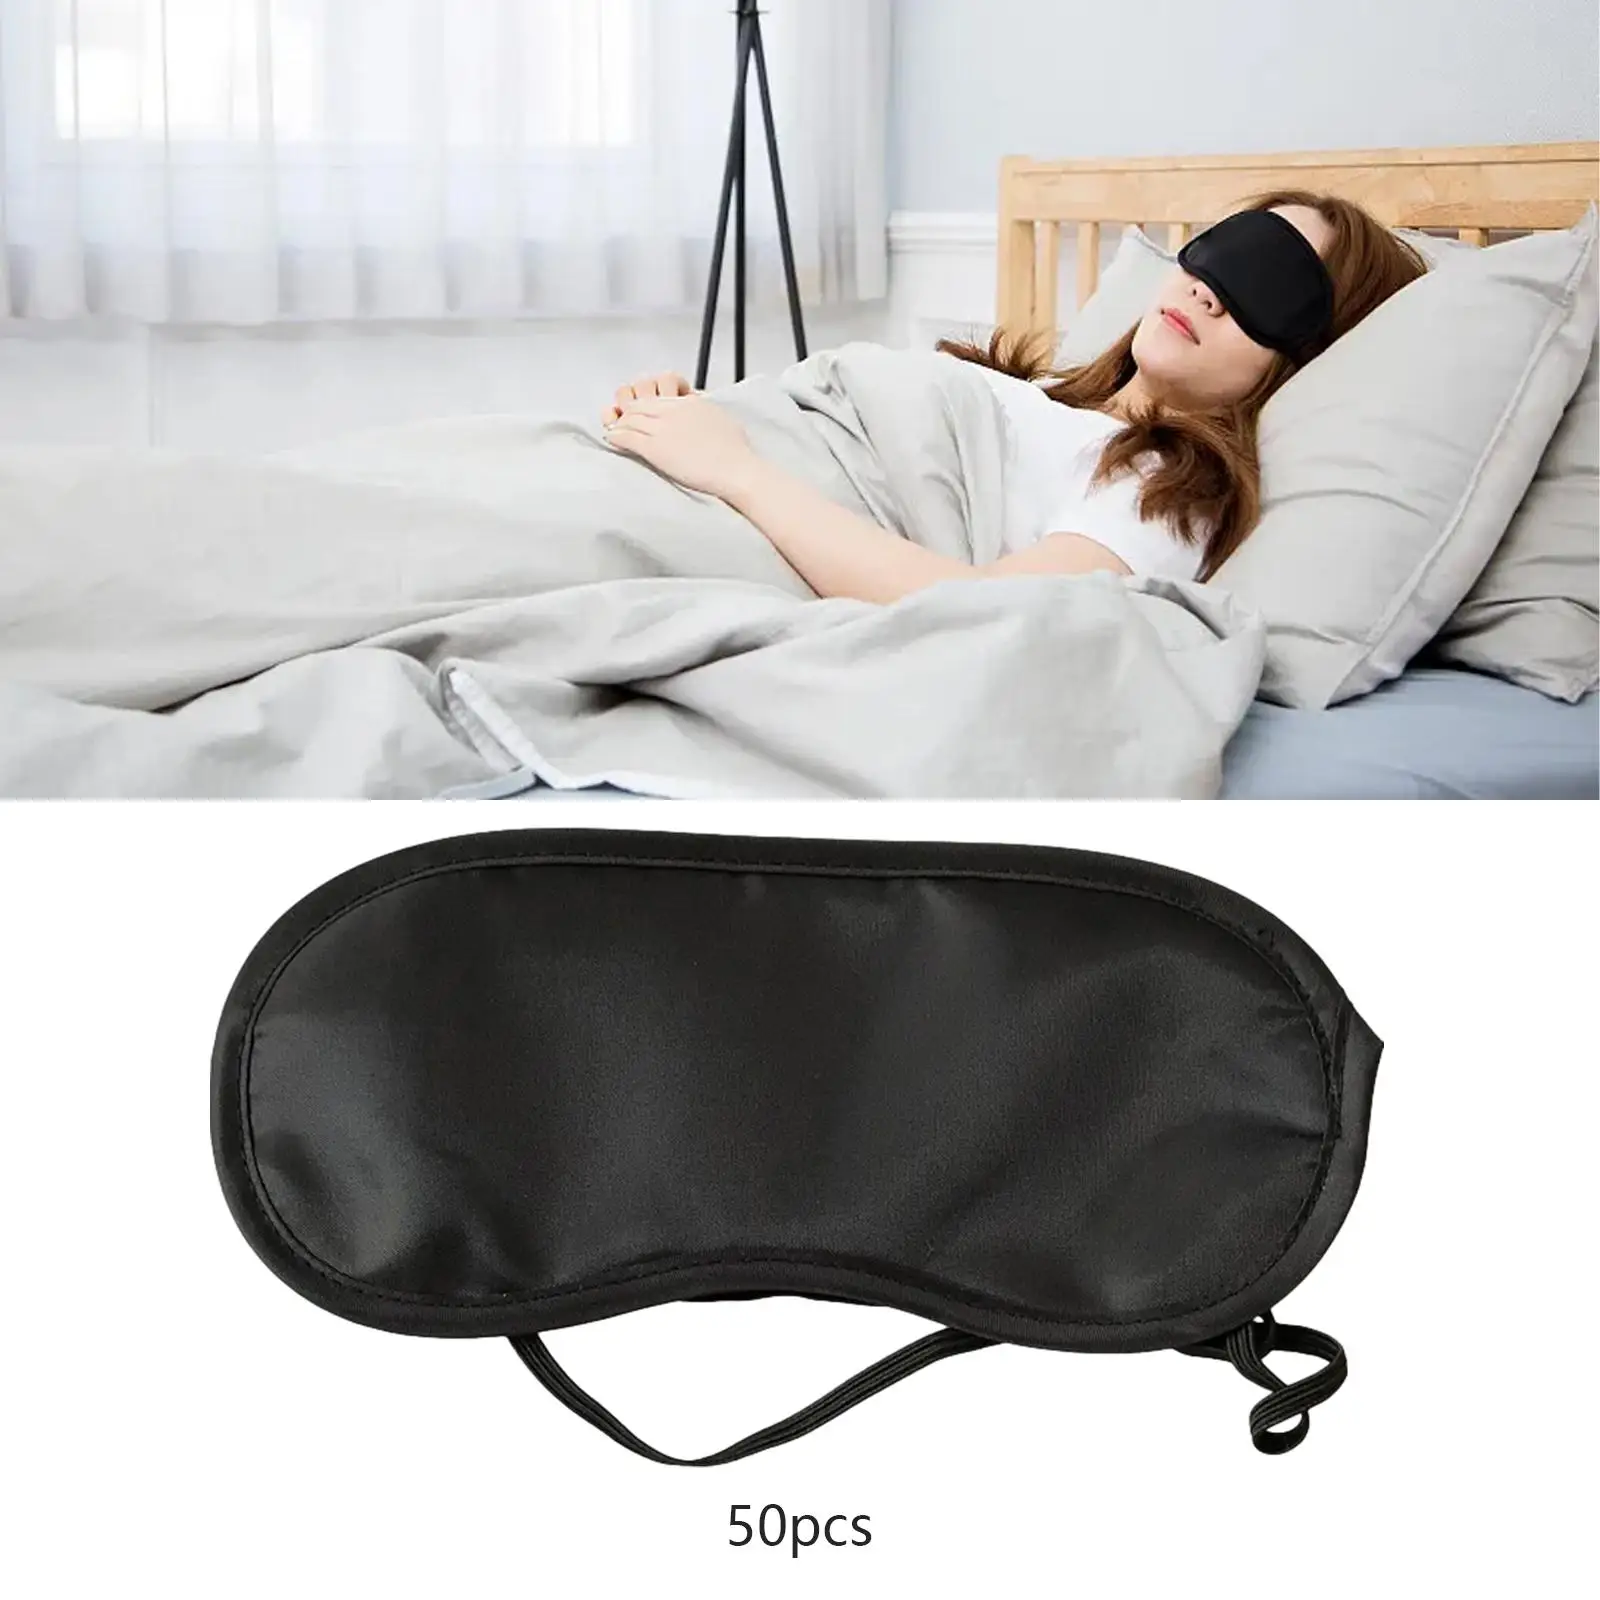 50Pcs Sleeping Eye Mask Disposable Eye Cover Hotel Women Men Party Games Sleeping Mask Sleeping Blindfold Eye Patch for Sleeping